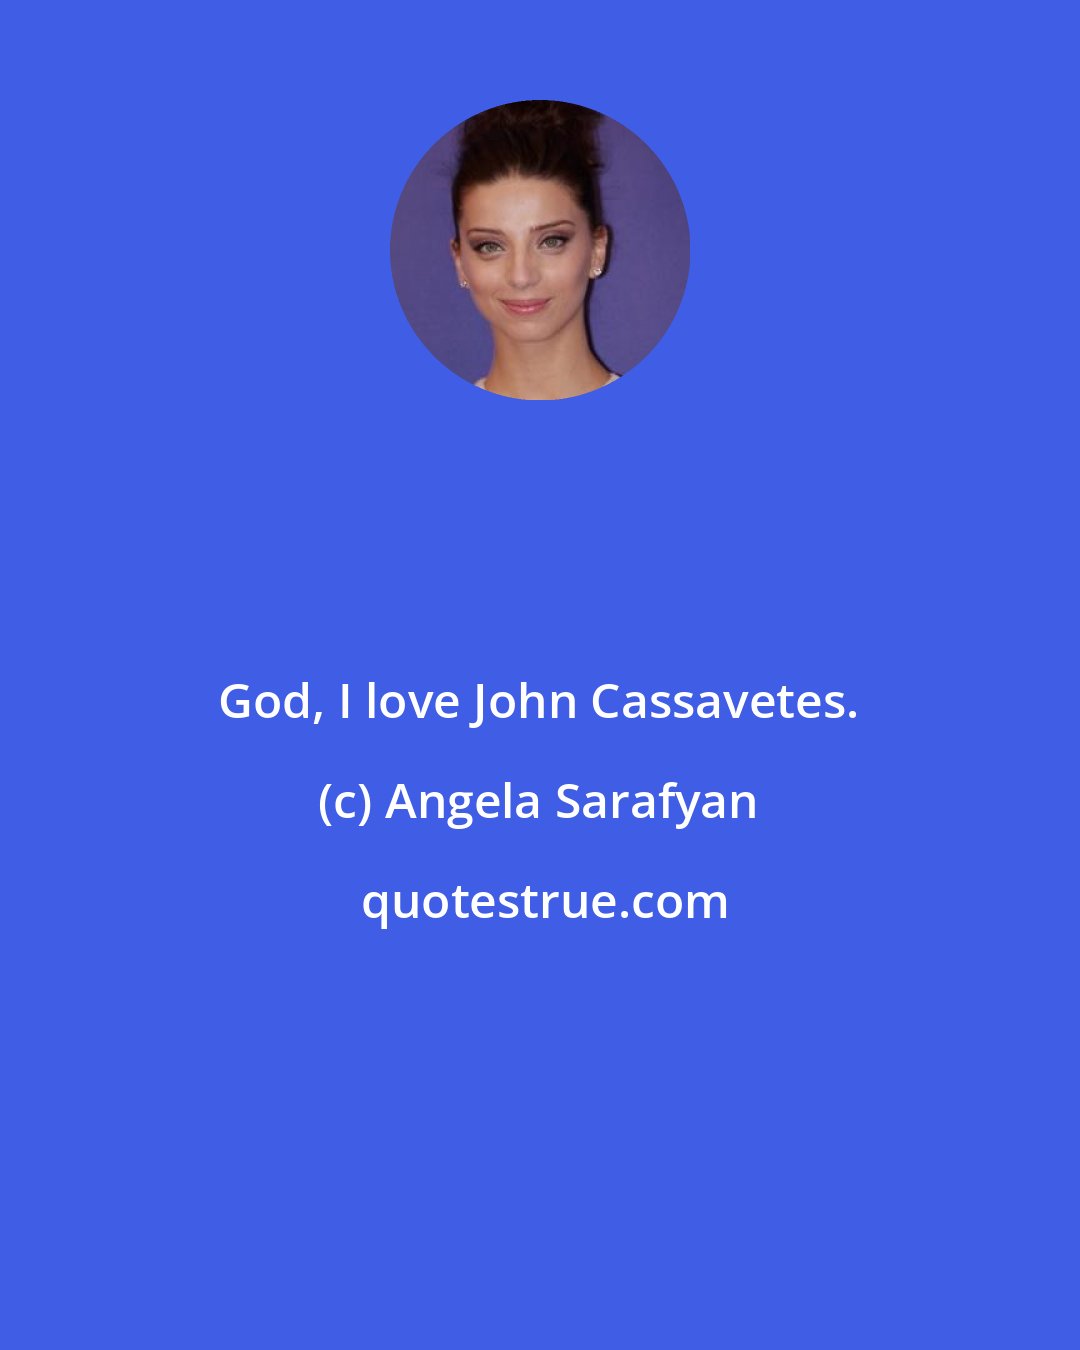 Angela Sarafyan: God, I love John Cassavetes.